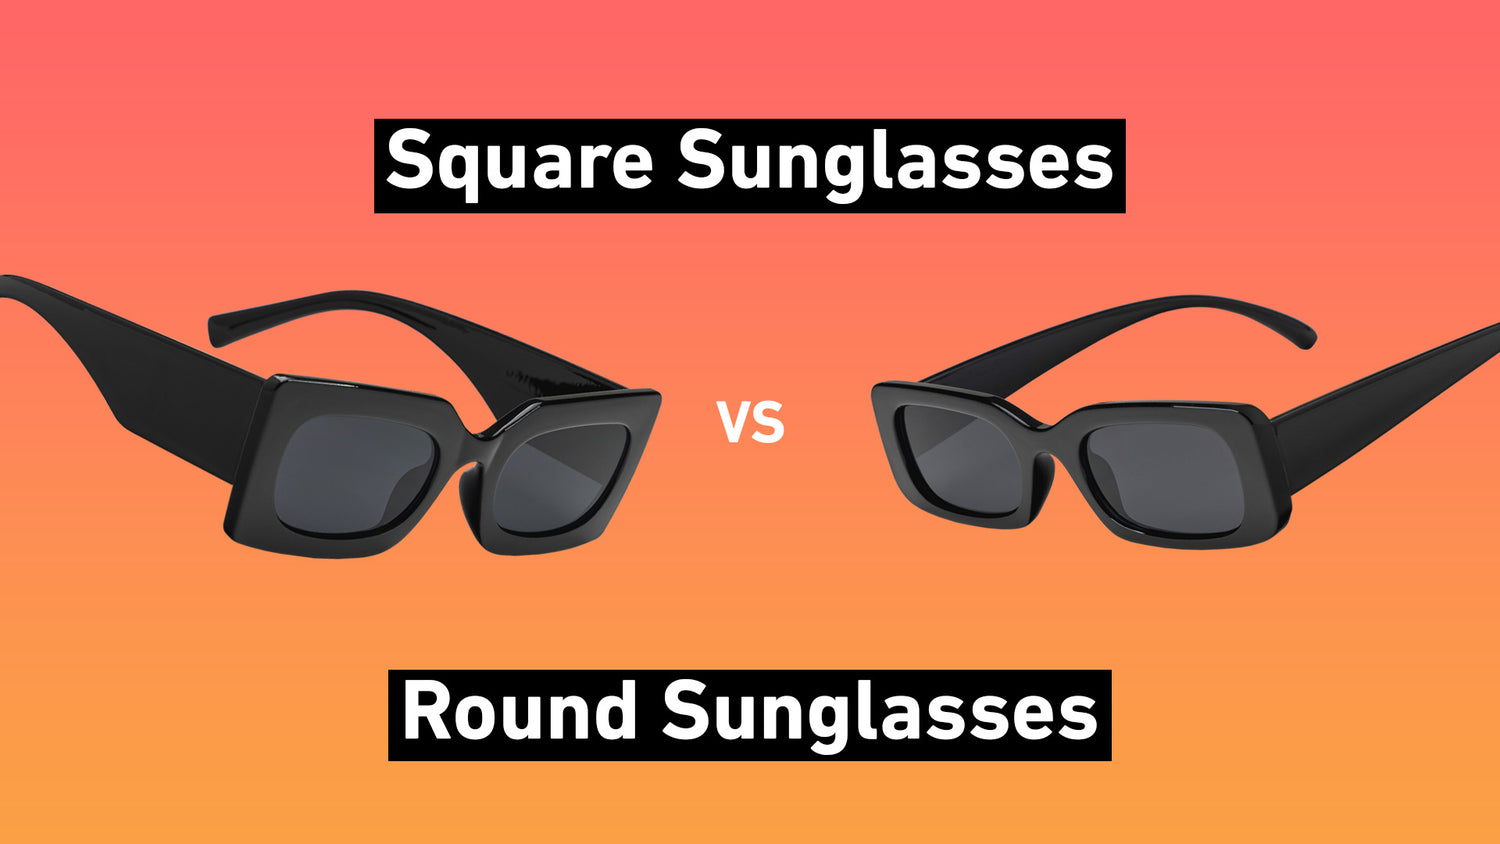 Square Sunglasses vs Round Sunglasses